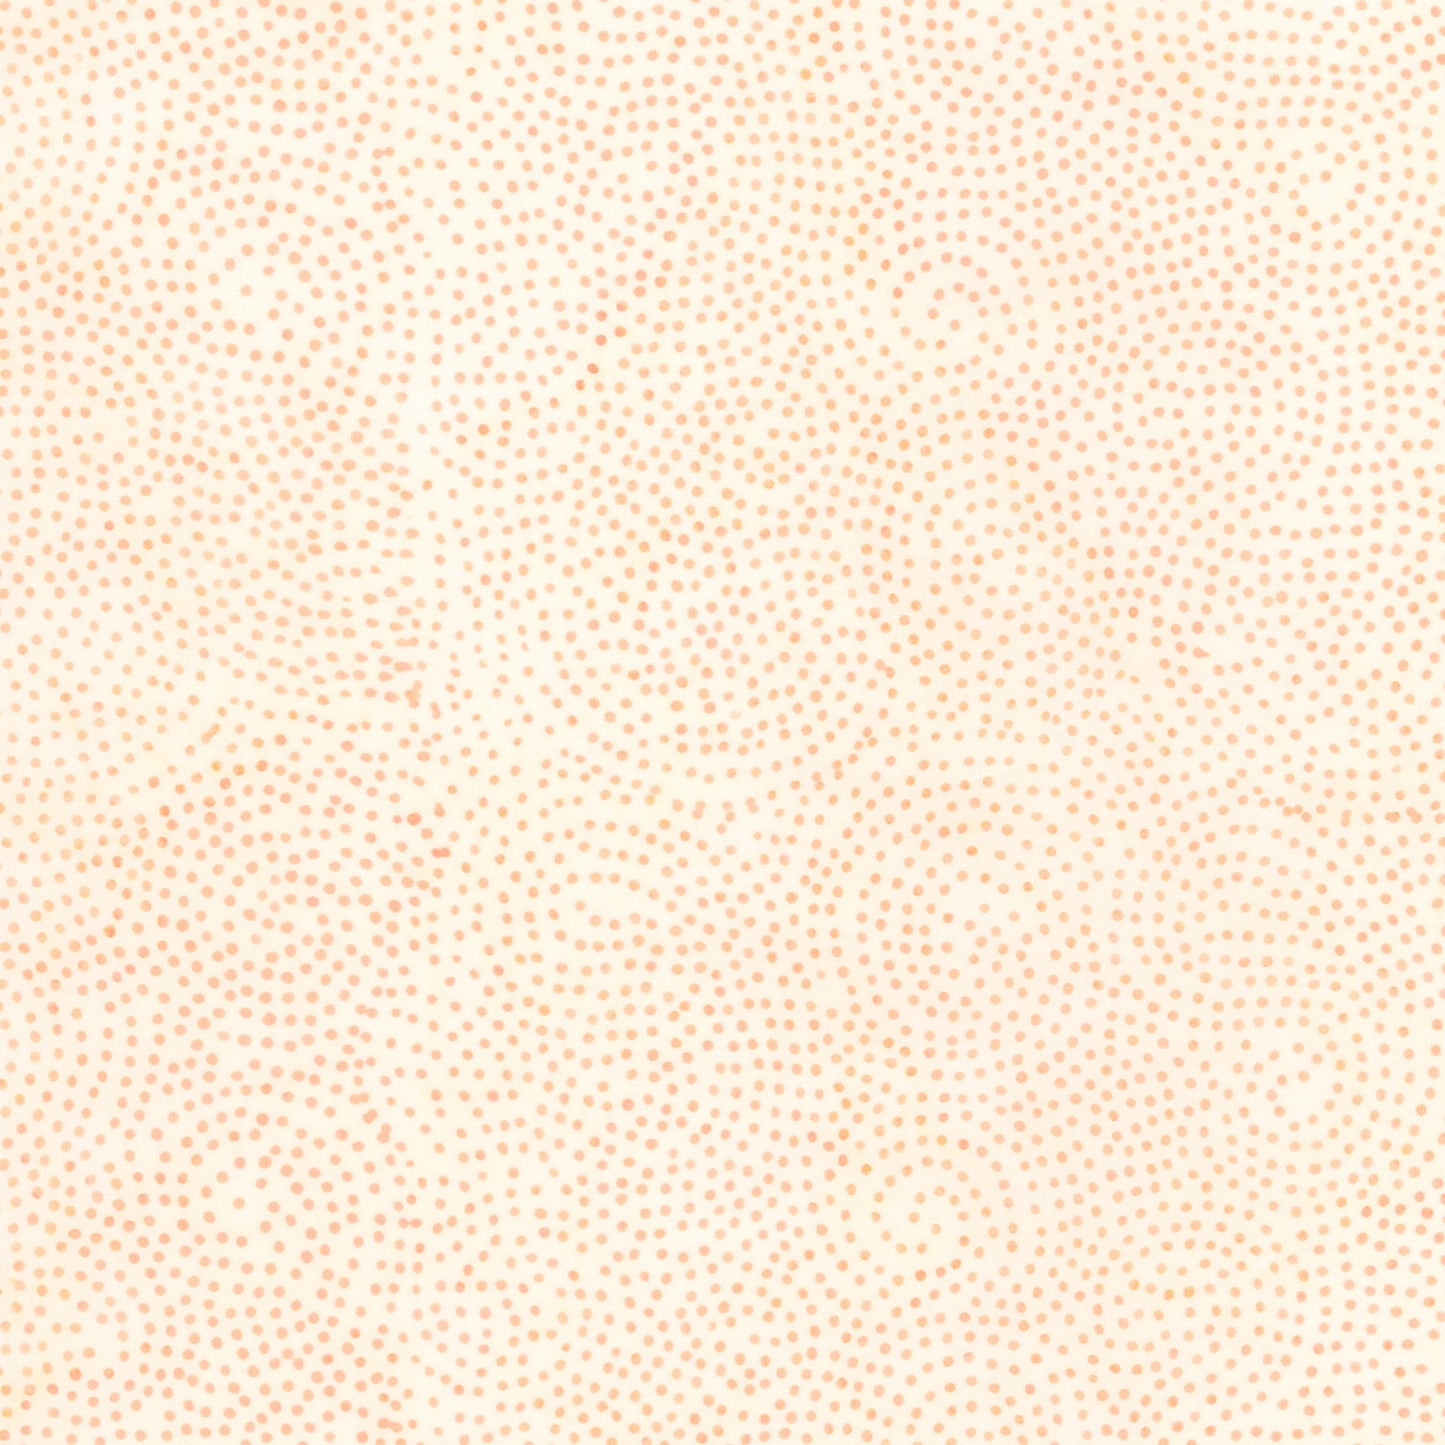 Morris Tiles Batiks - Paisley Dot Neutral Ghost Yardage Primary Image